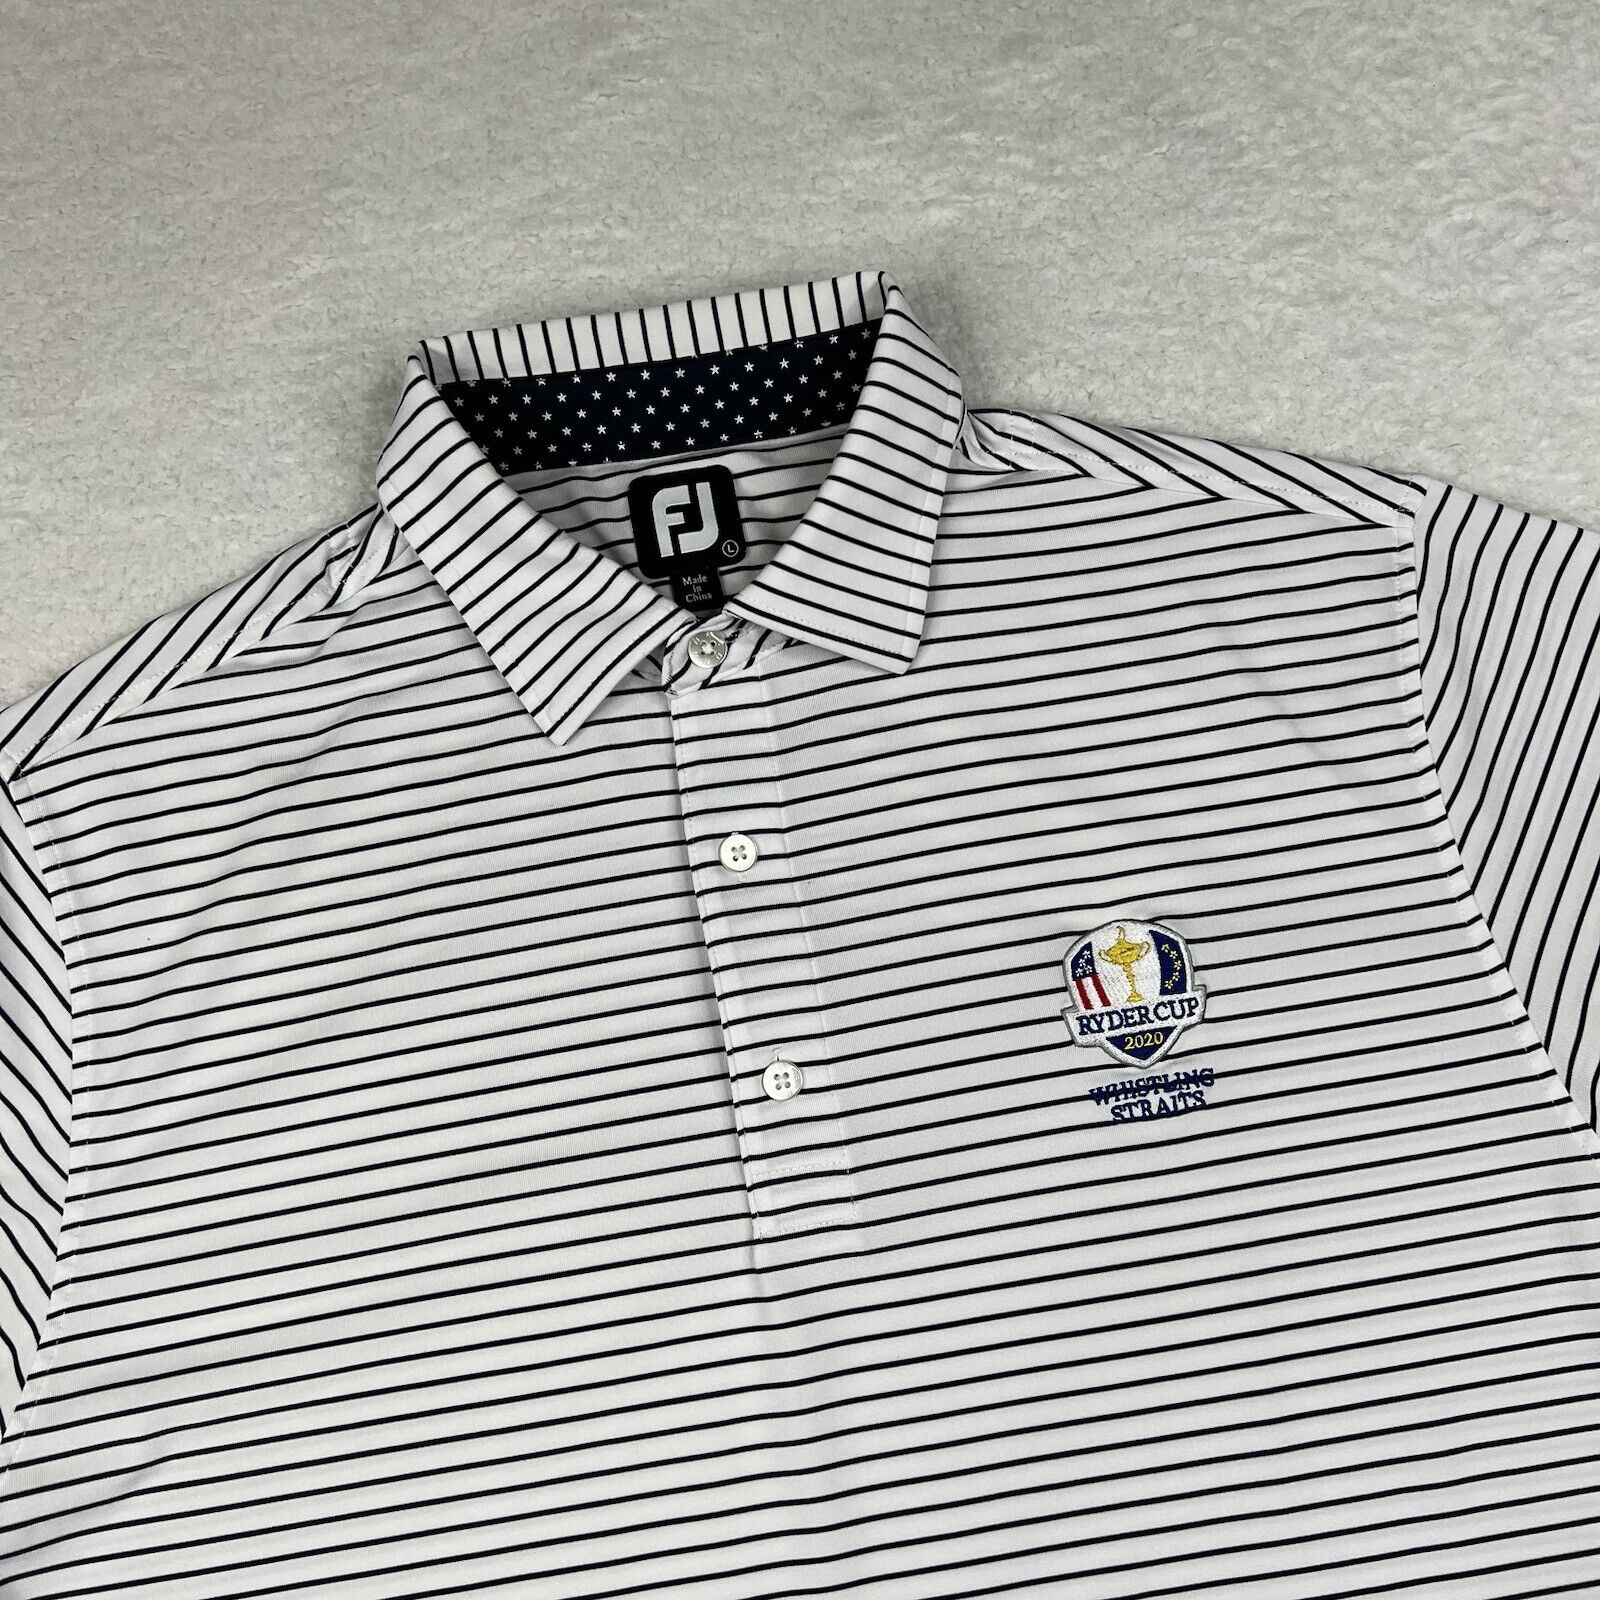 Footjoy FJ Shirt Mens Large White Striped Polo Ryder Cup 2020 Golf Short Sleeve